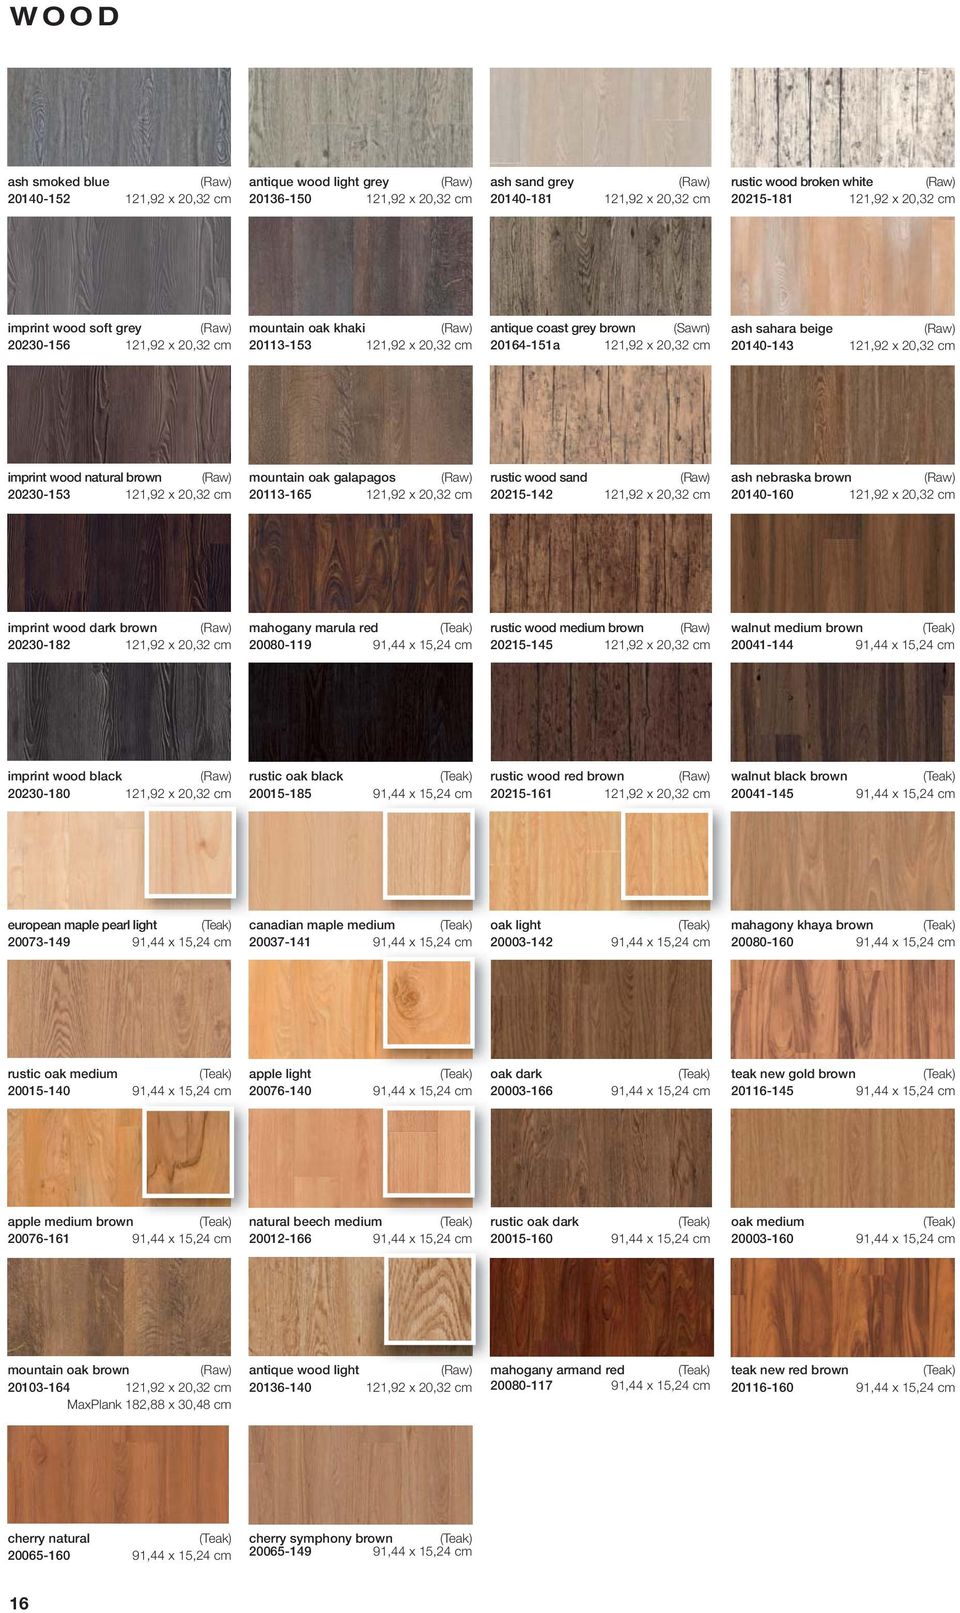 ash sahara beige (Raw) 20140-143 121,92 x 20,32 cm imprint wood natural brown (Raw) 20230-153 121,92 x 20,32 cm mountain oak galapagos (Raw) 20113-165 121,92 x 20,32 cm rustic wood sand (Raw)